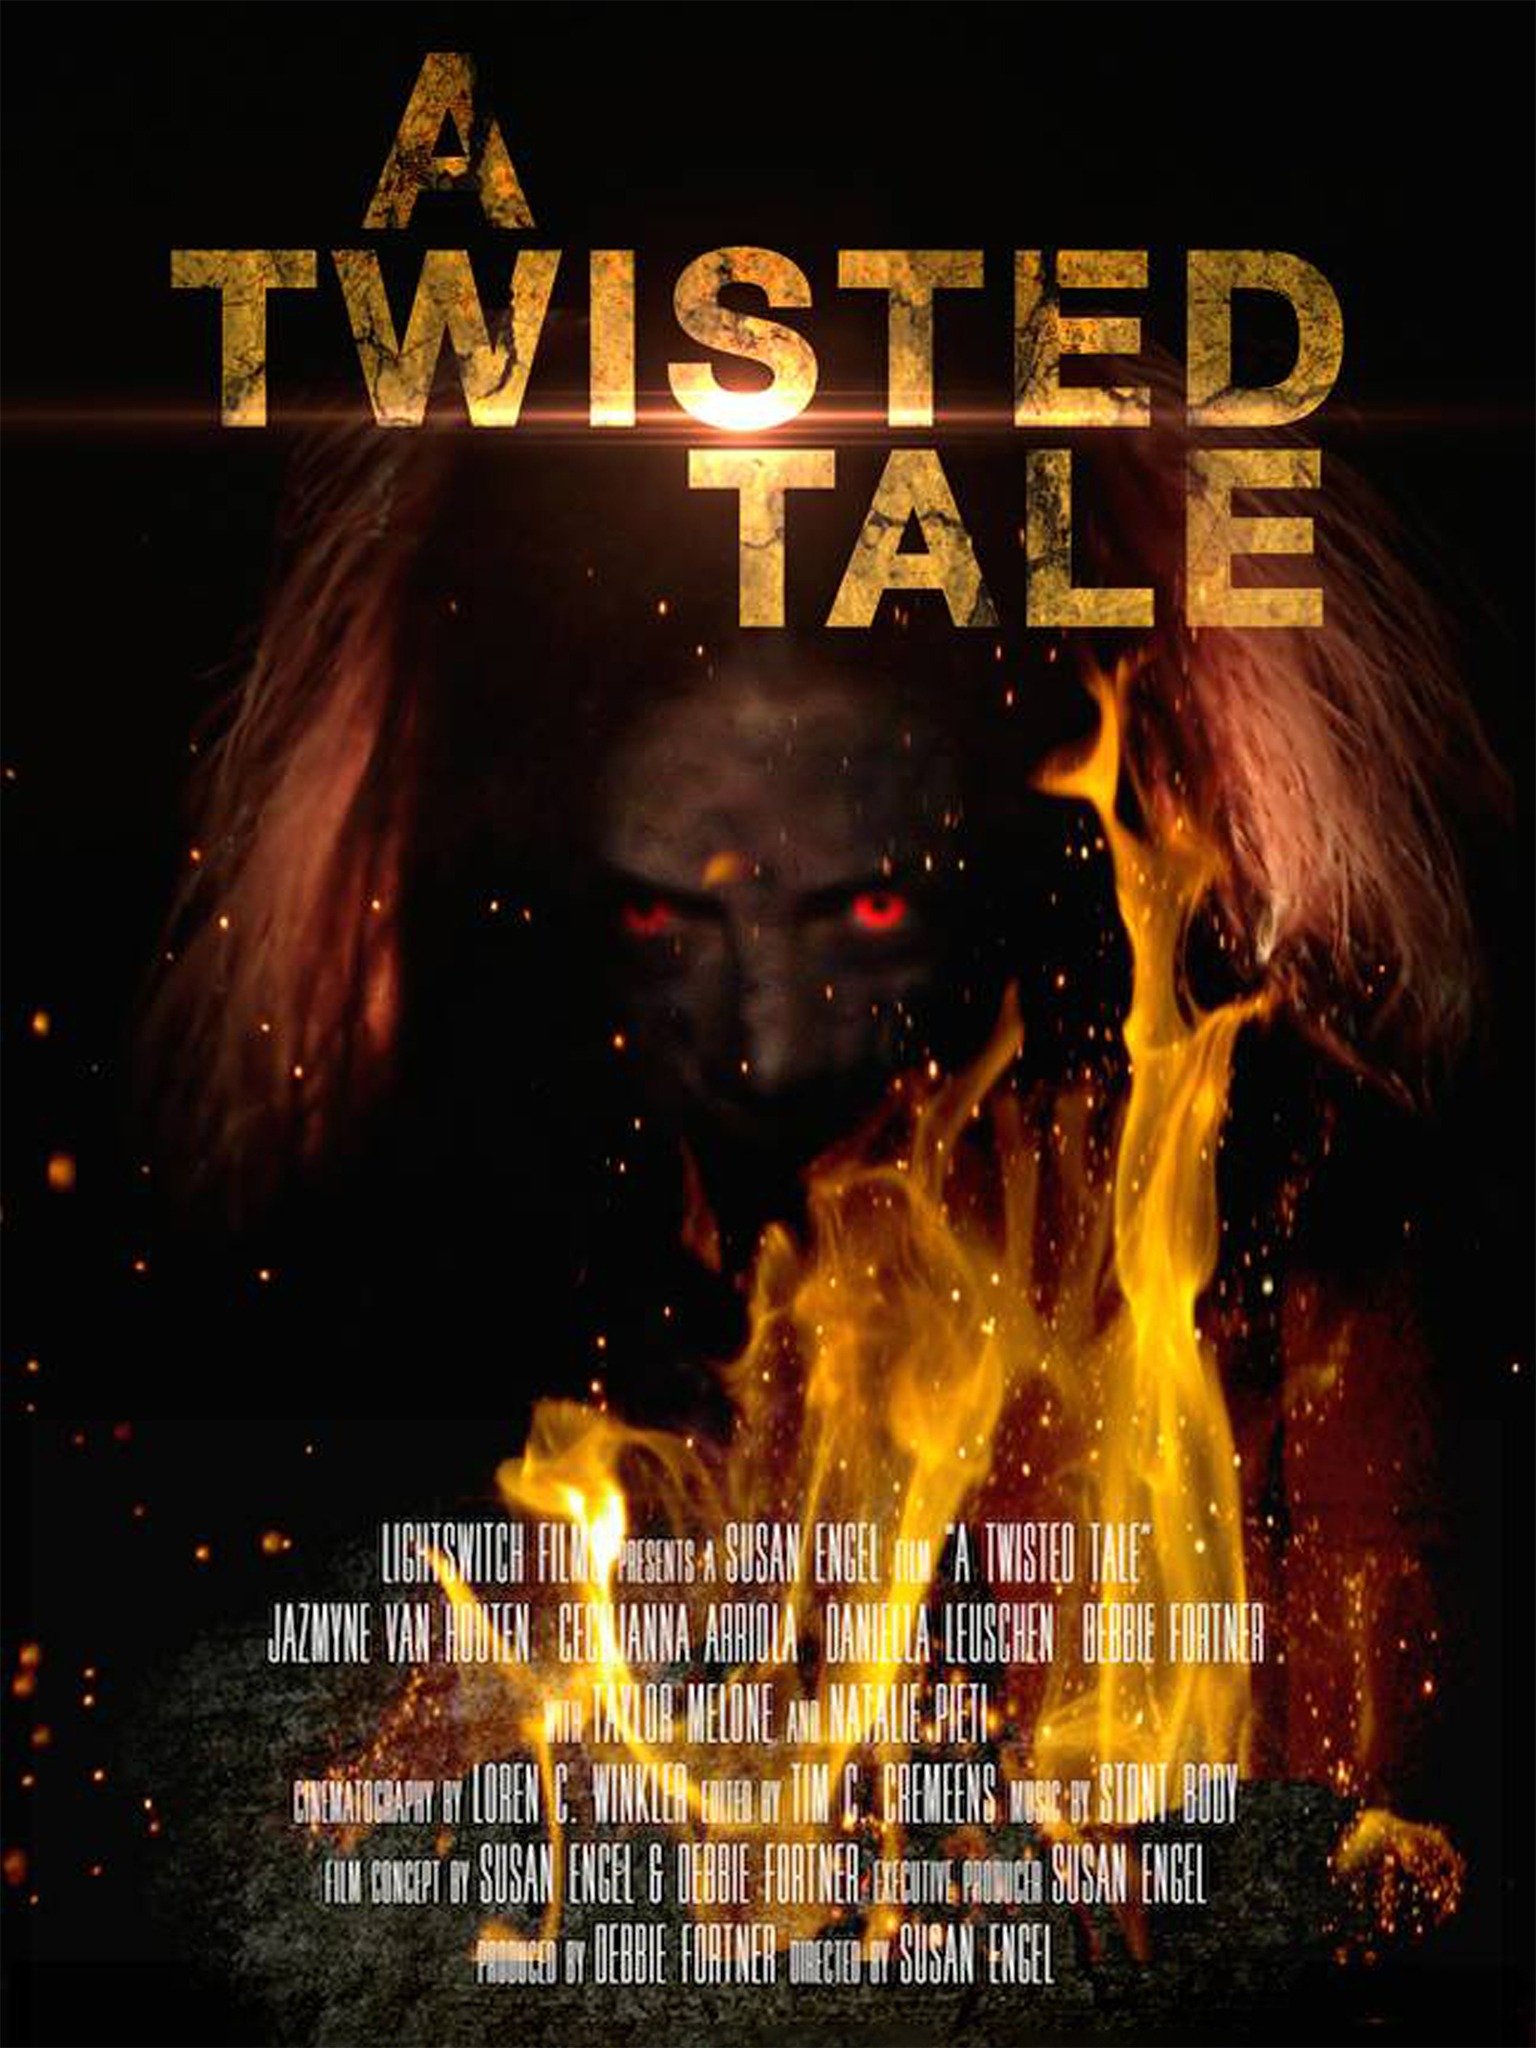 Twisted Tales. A Twisted Tale game. A Twisted Tale день нерождения. A twisted tale